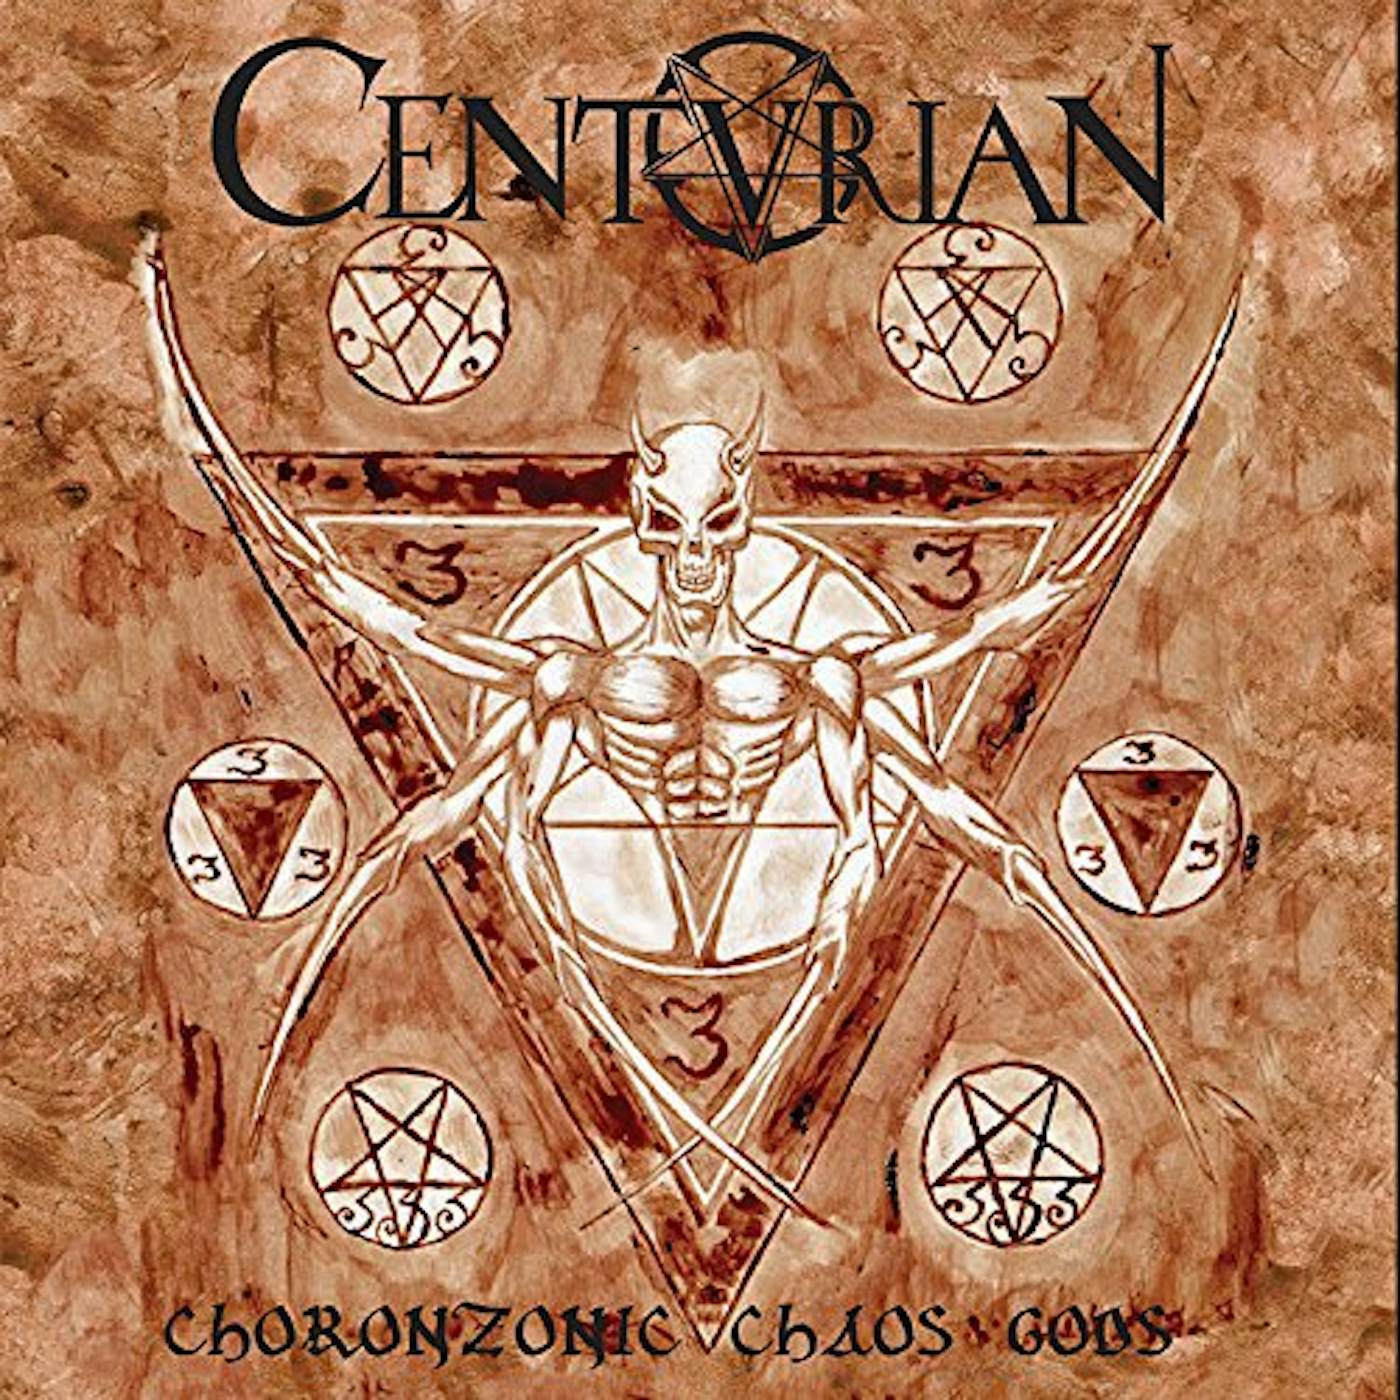 Centurian Choronzonic Chaos Gods Vinyl Record